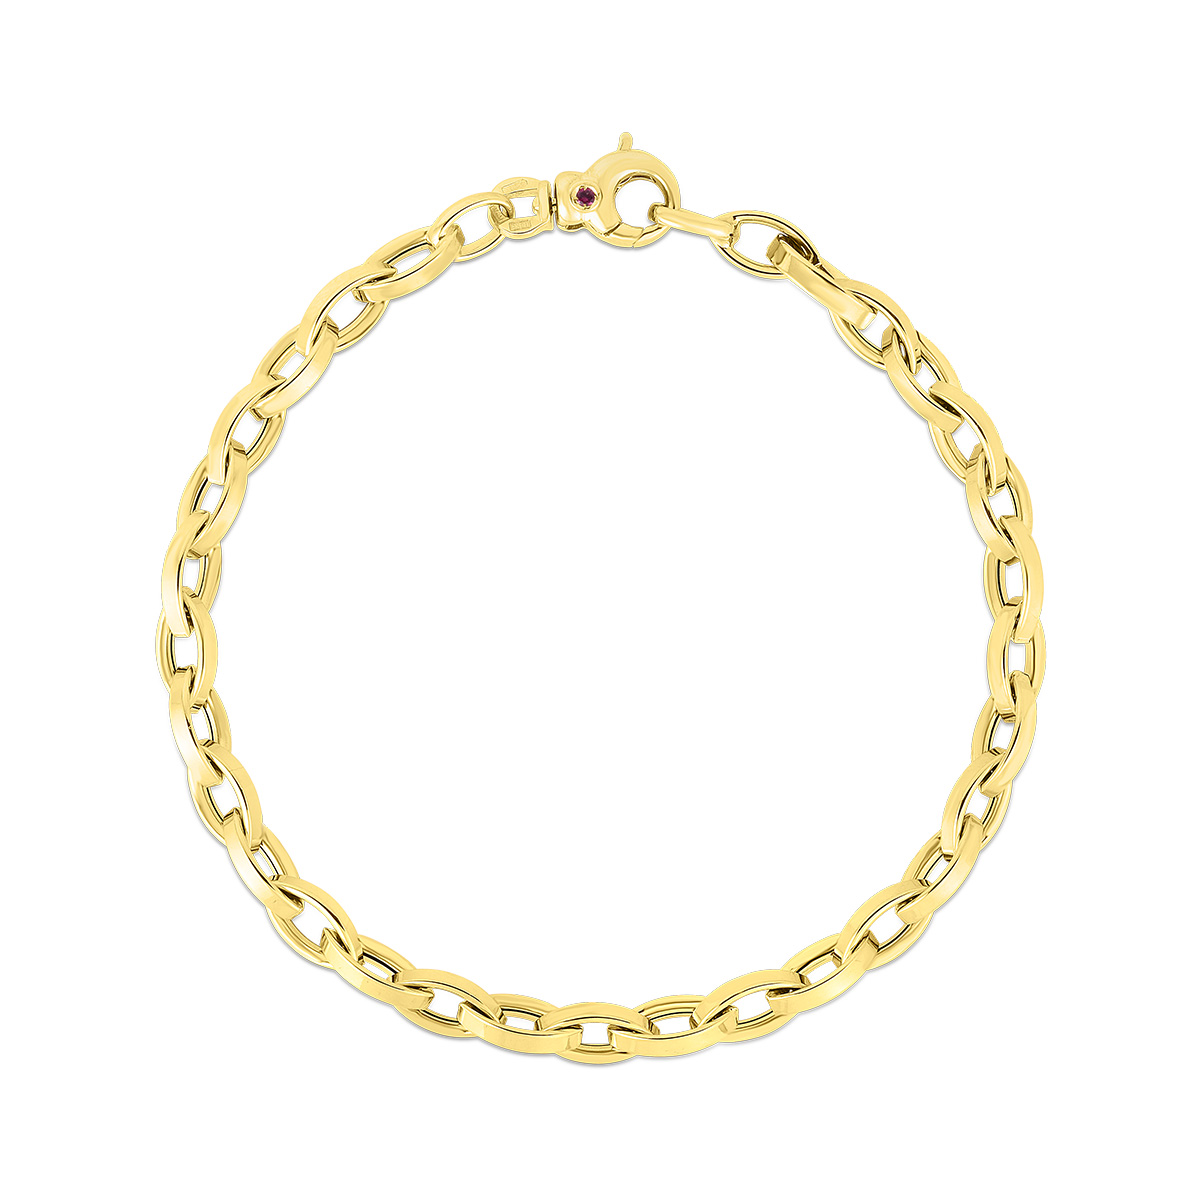 Roberto Coin Designer Gold Almond Link Chain Bracelet -  5310086AYLB0